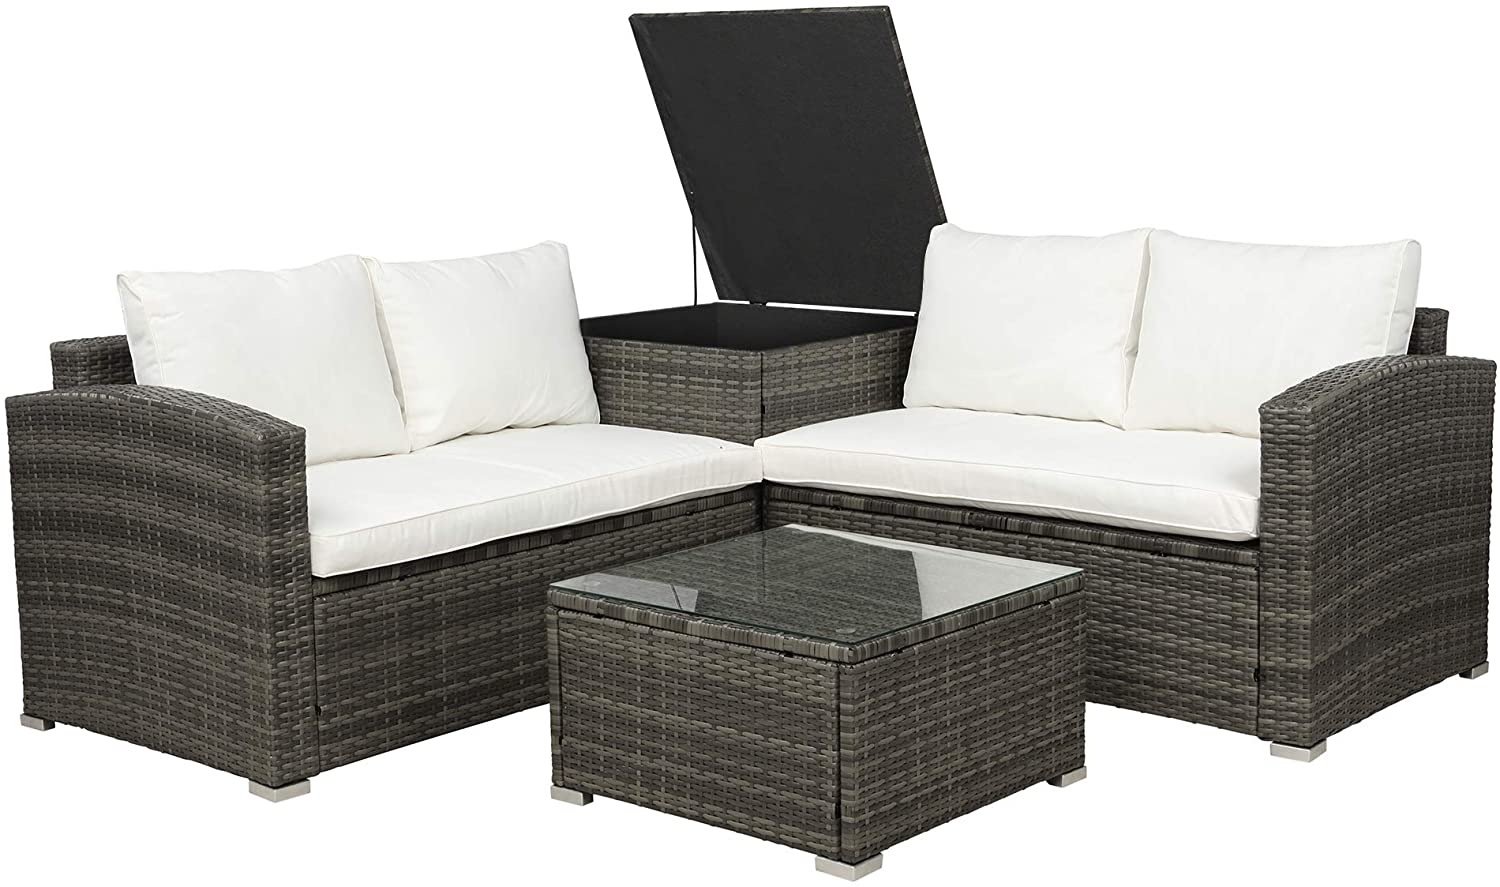 VIRUBI 4 PCS Outdoor Cushioned PE Rattan Wicker Sectional Sofa Set Garden Patio Furniture Set (Beige Cushion) - image 2 of 6